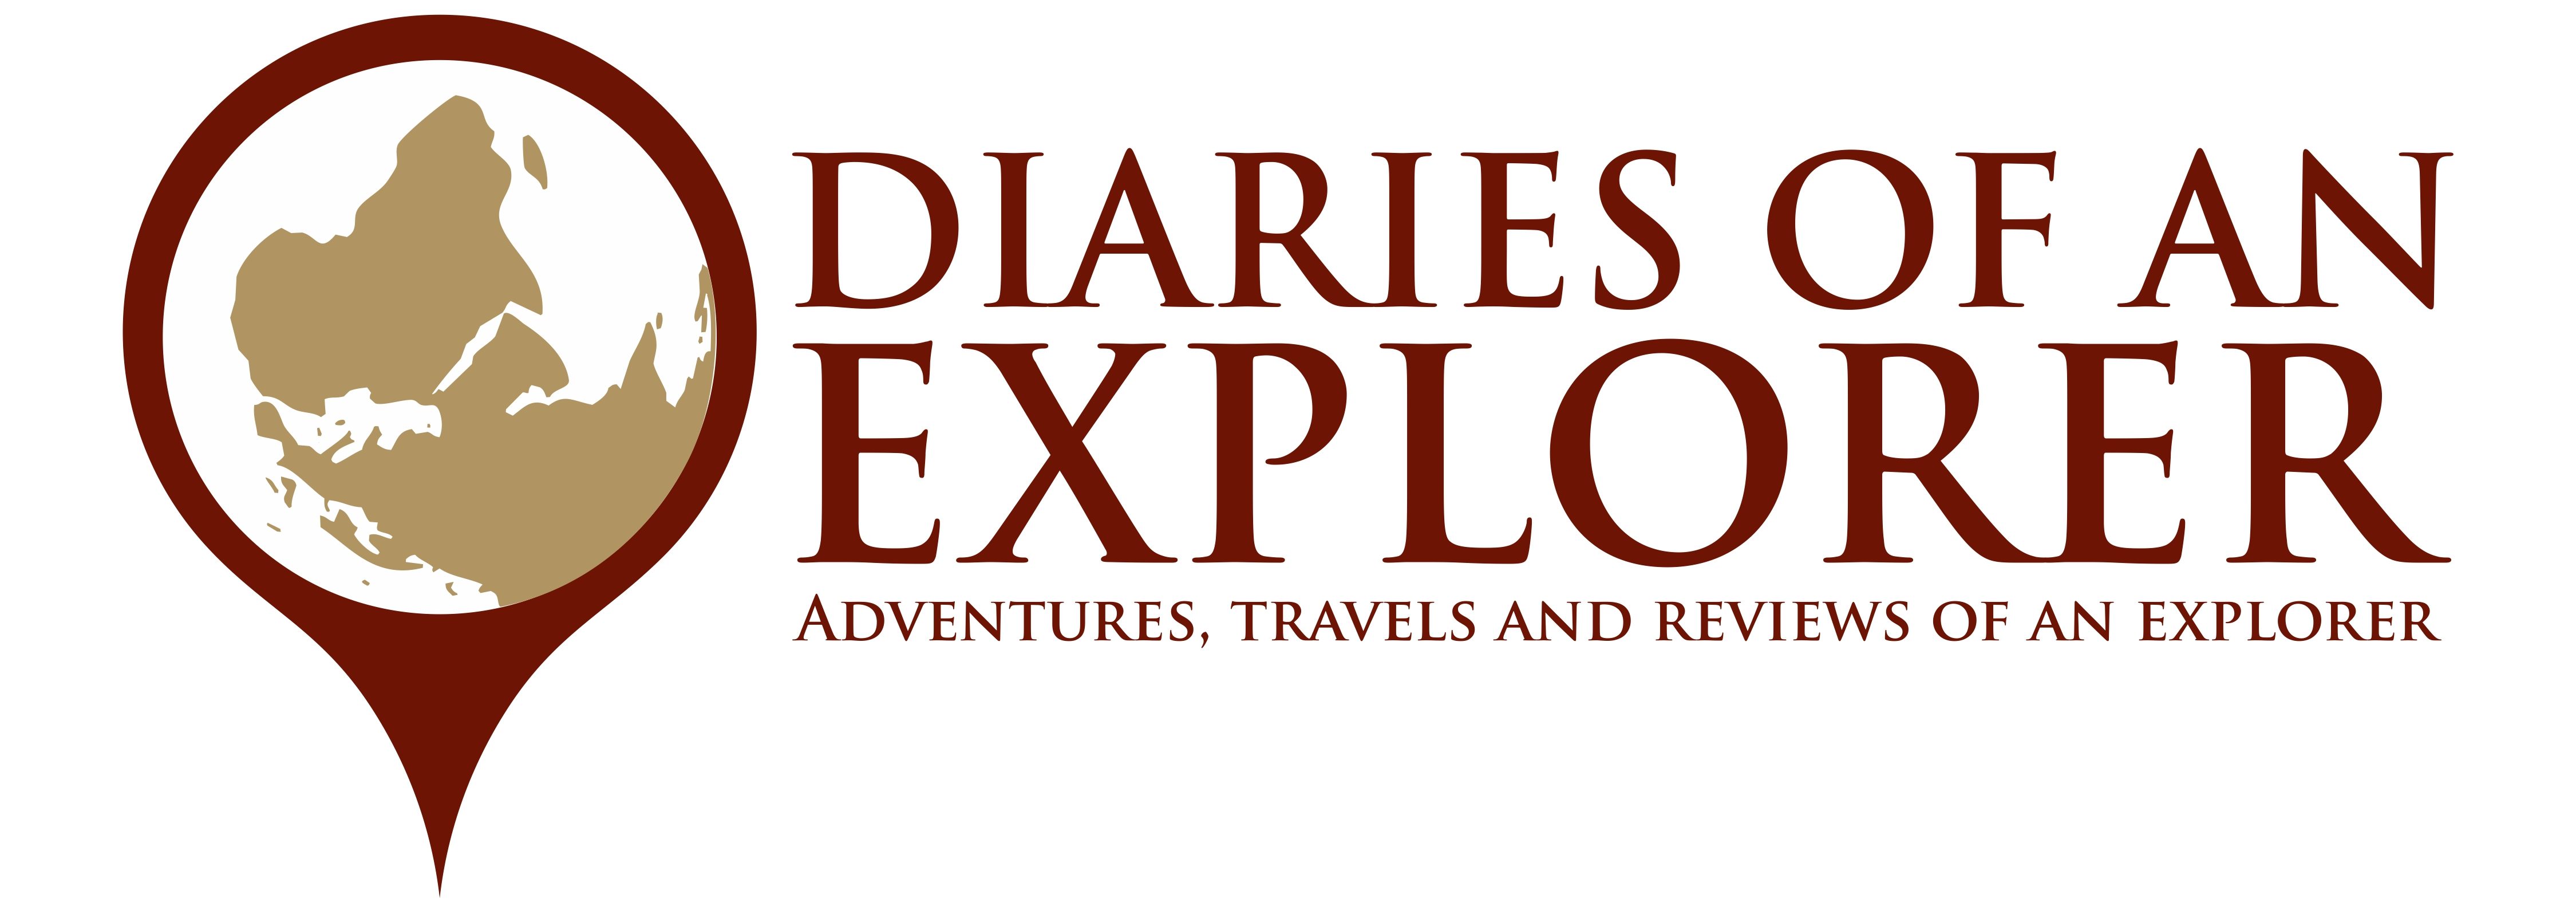 Diaries of an explorer